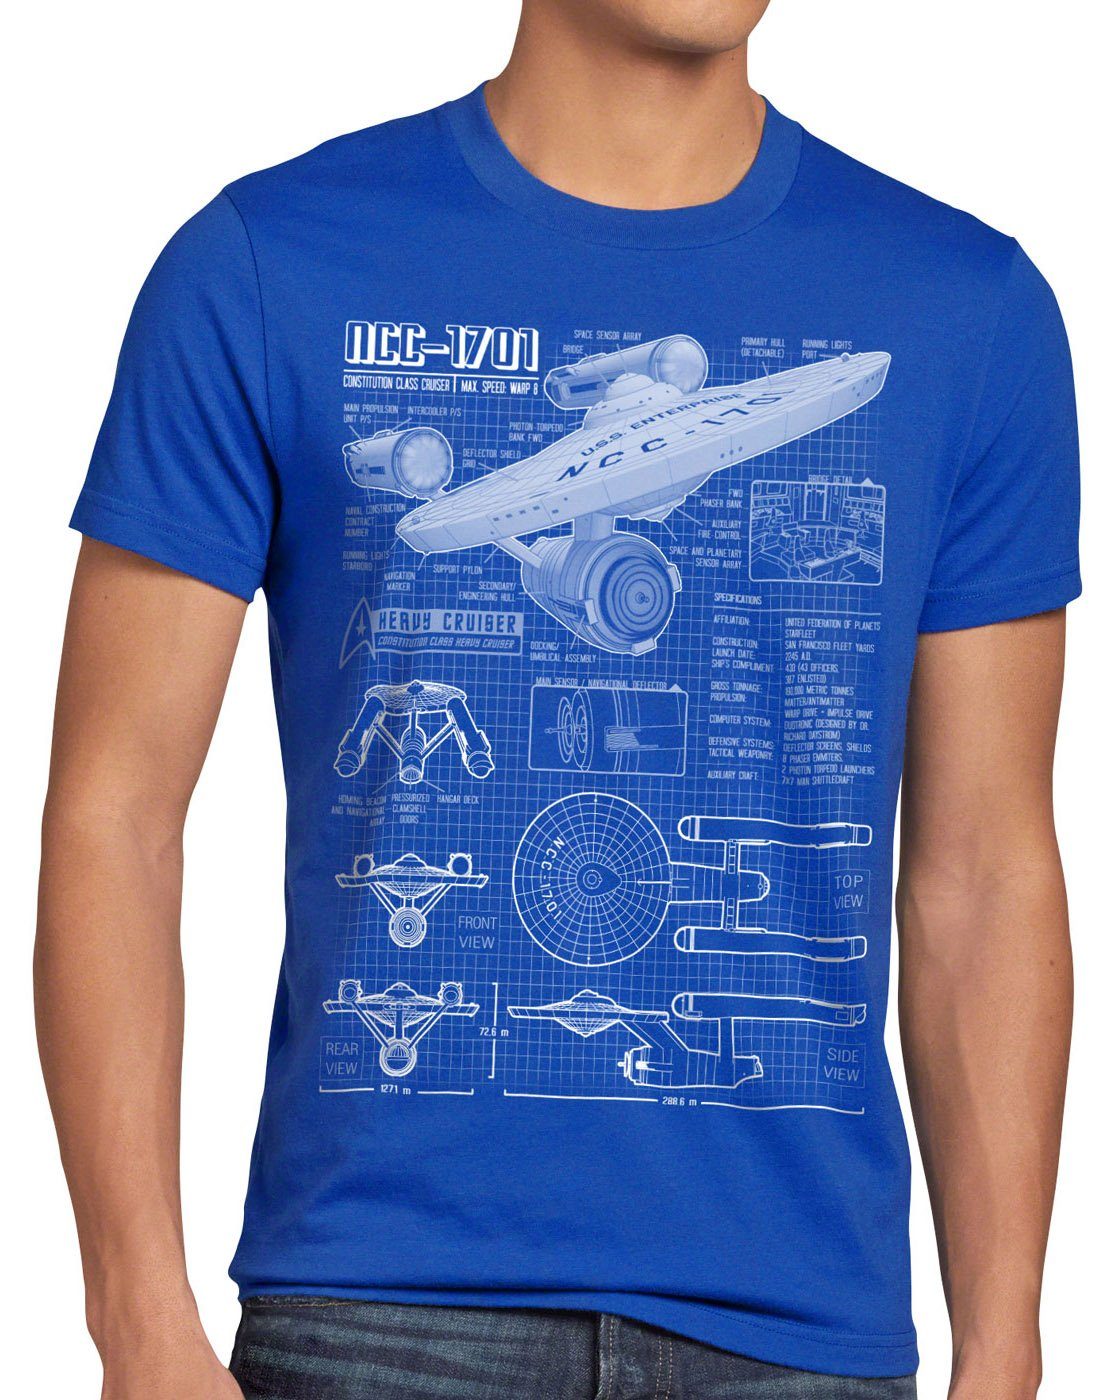 style3 Print-Shirt Herren T-Shirt NCC-1701 christopher pike trek trekkie  star sternenflotte klingon